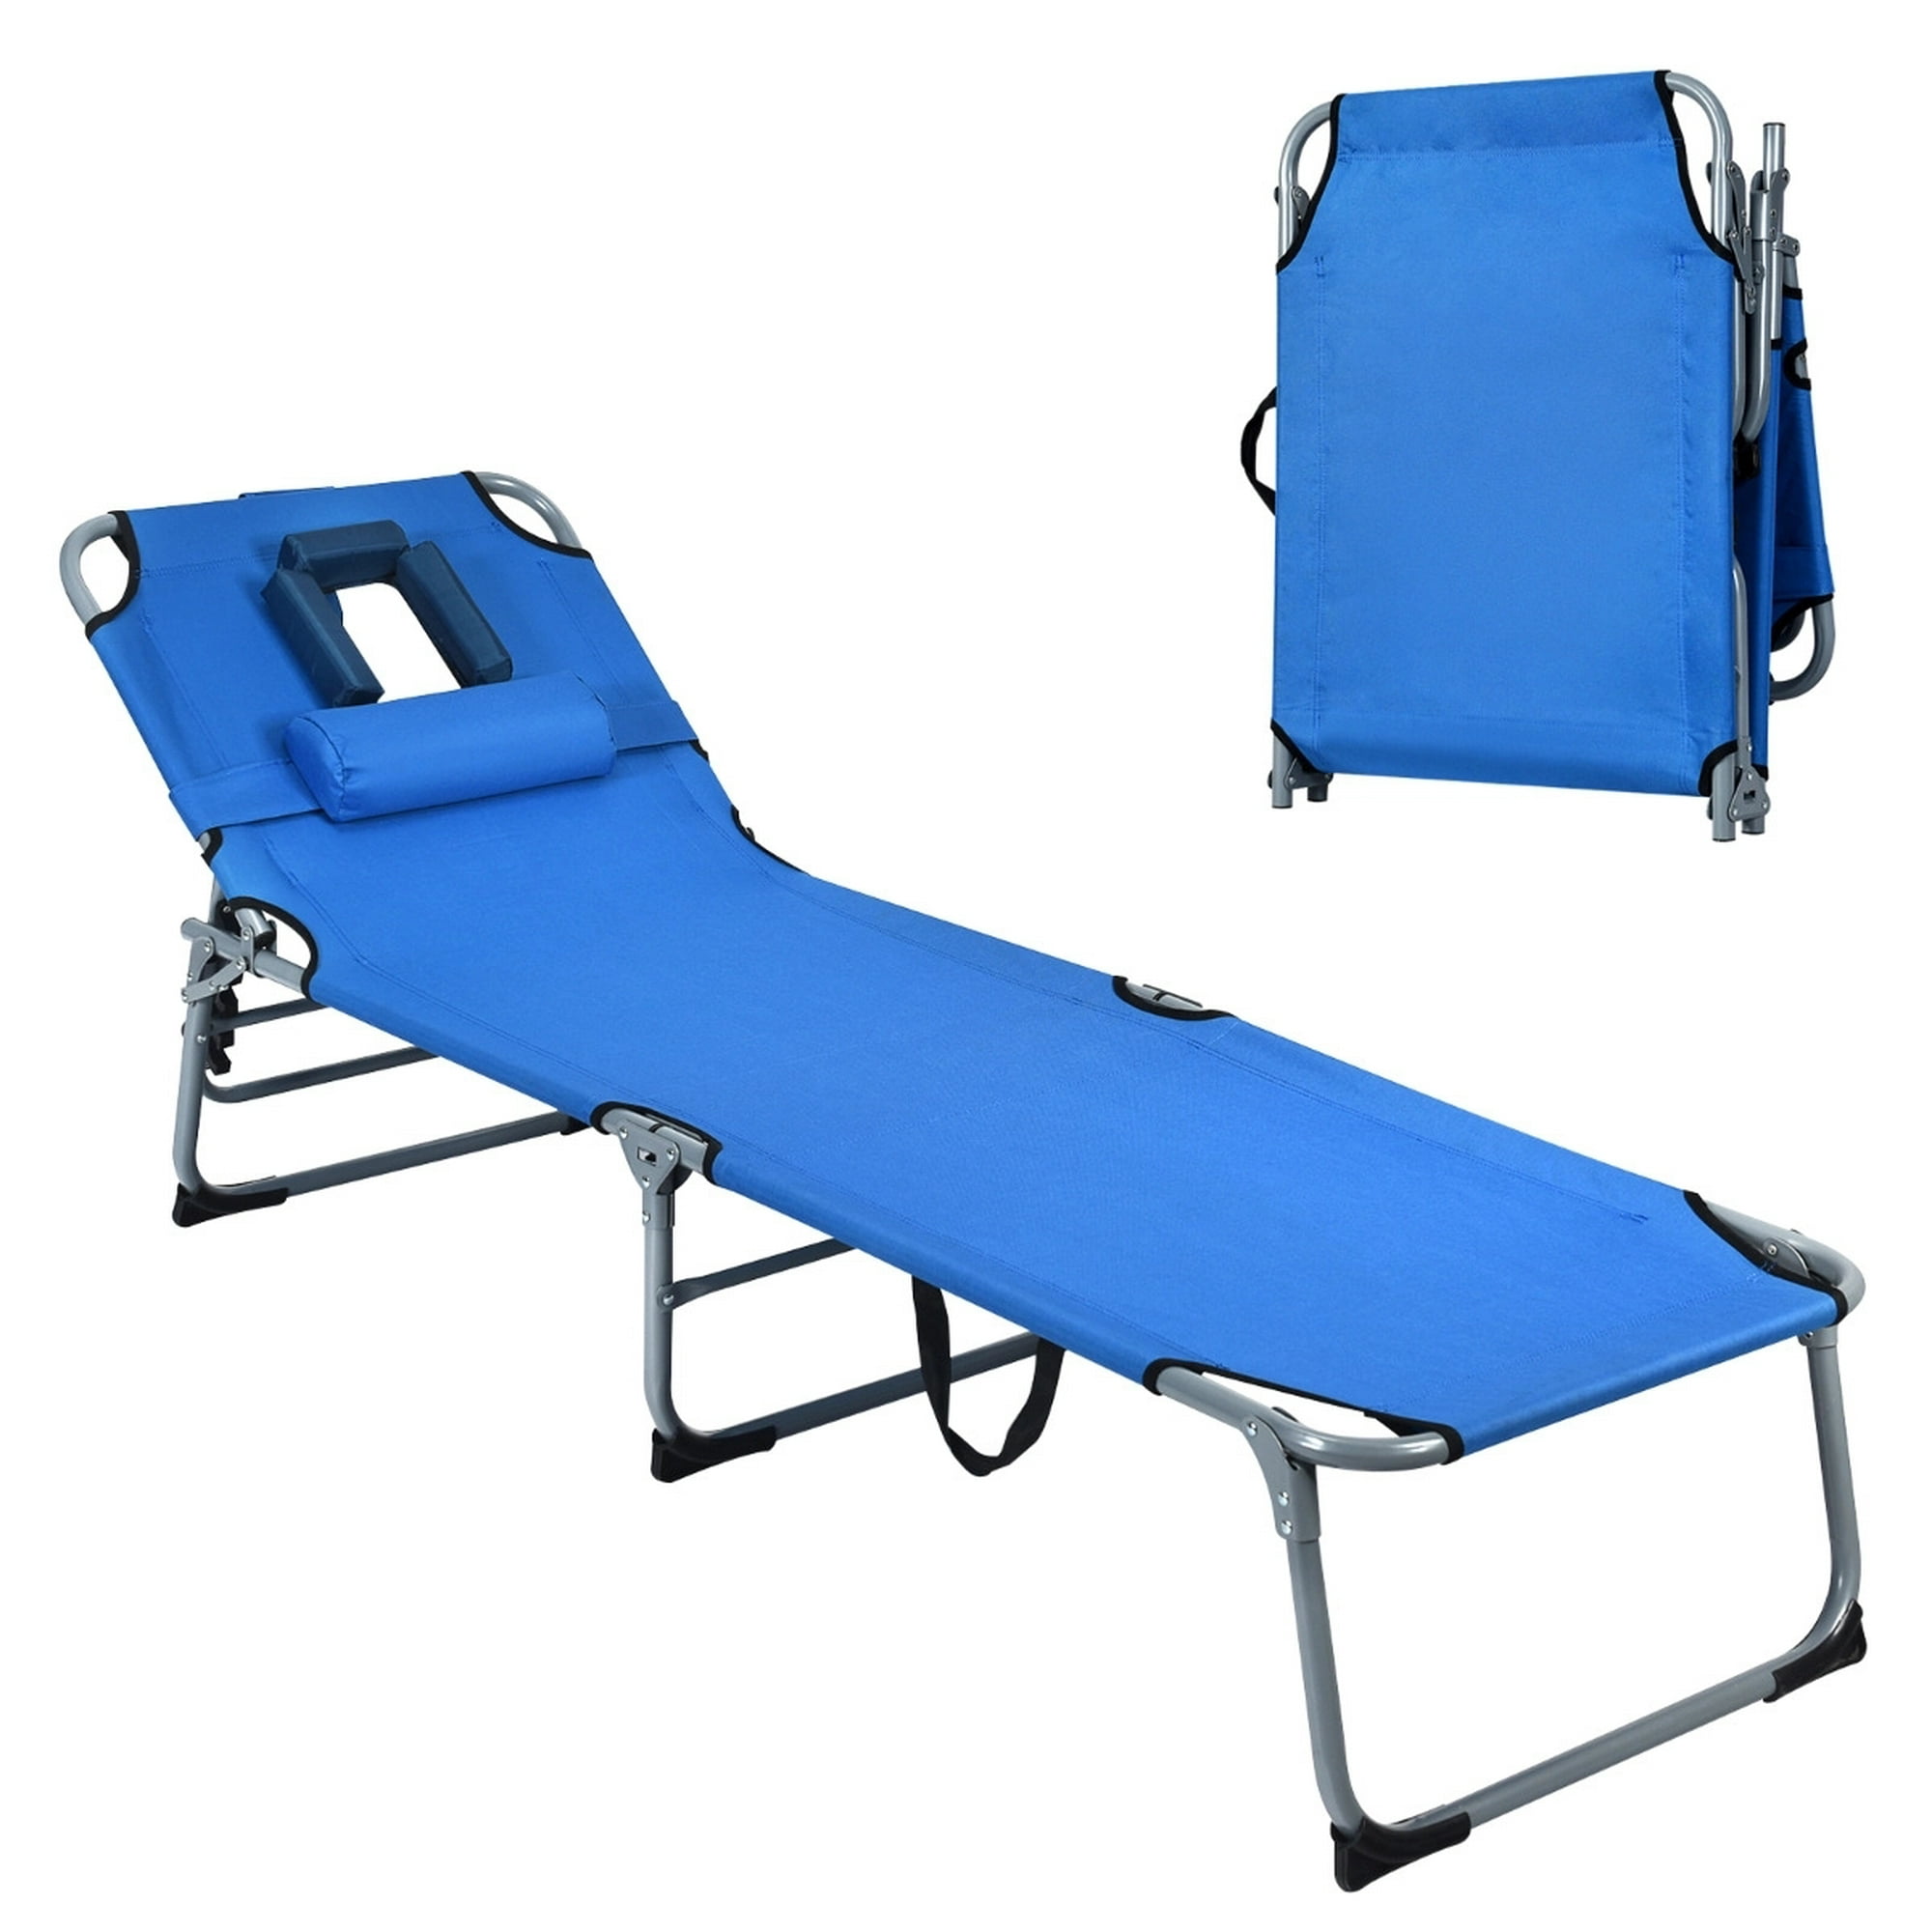 SHG - Tumbona plegable reclinable, ajustable, para piscina, patio, playa,  camping, sillón reclinable B001